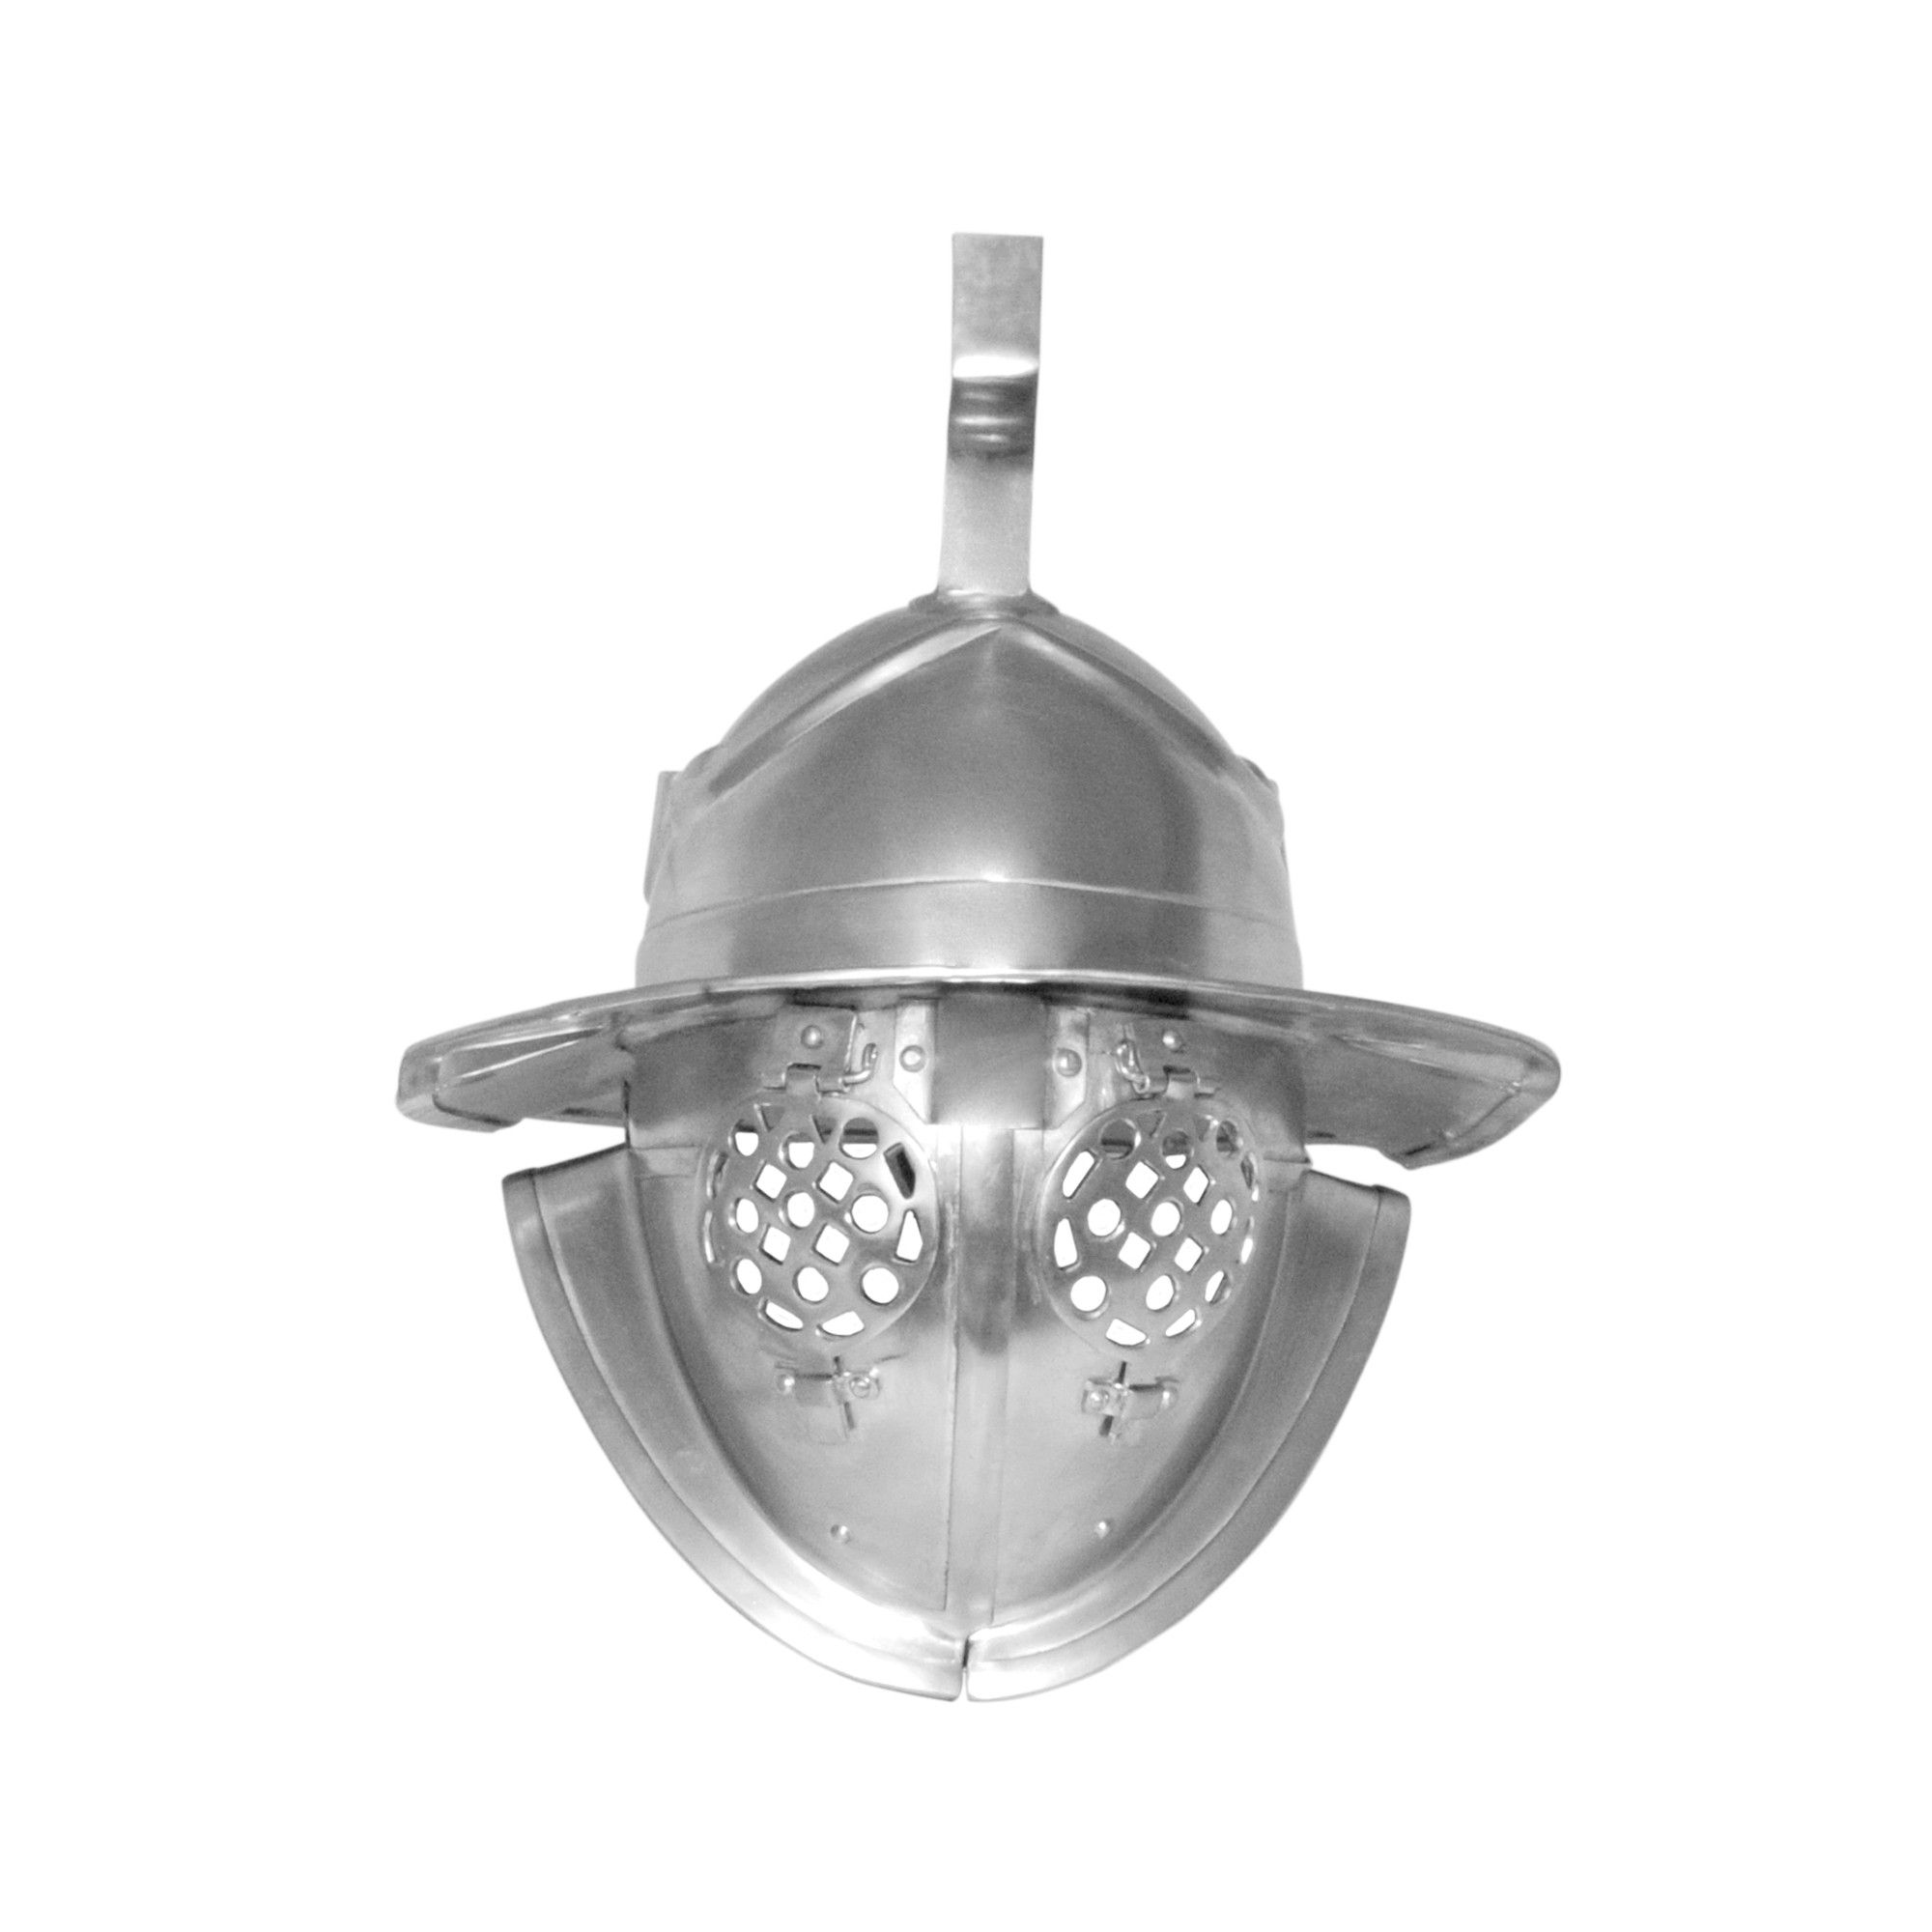 Murmillo Helmet - 1.6 mm Tinned Steel 